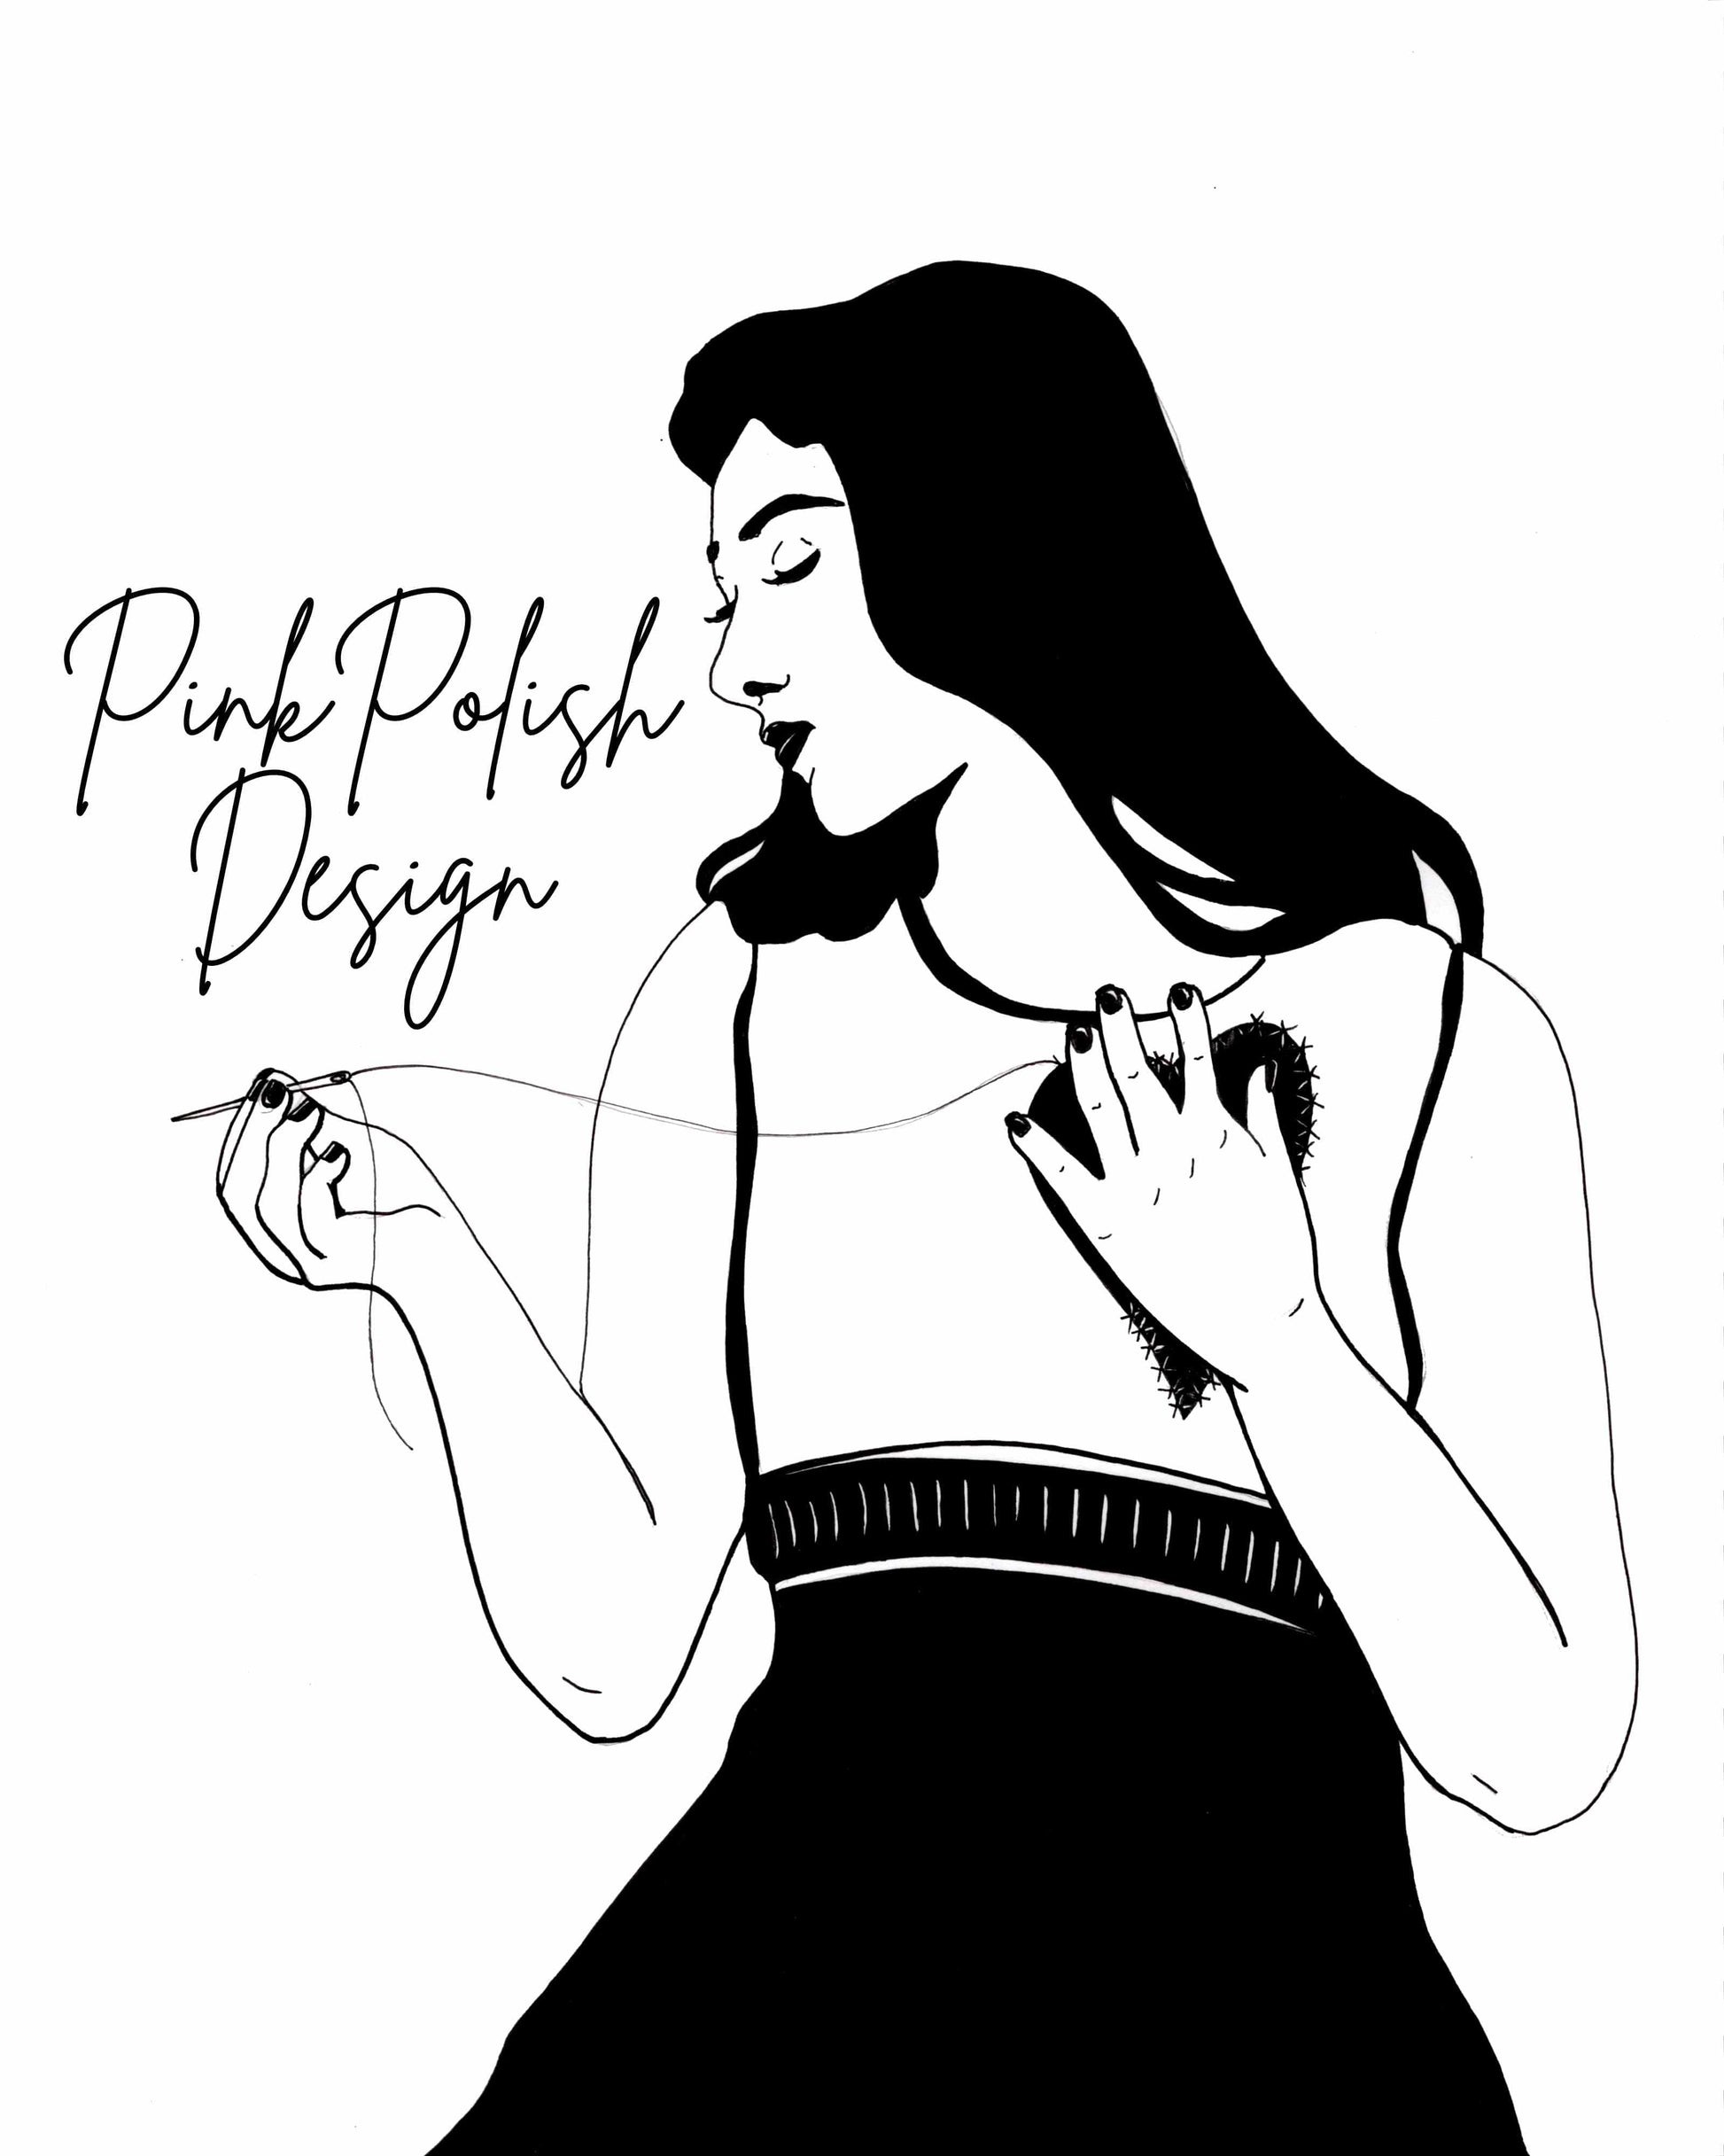 PinkPolish Design Art Prints "Patch" Ink Drawing: Art Print